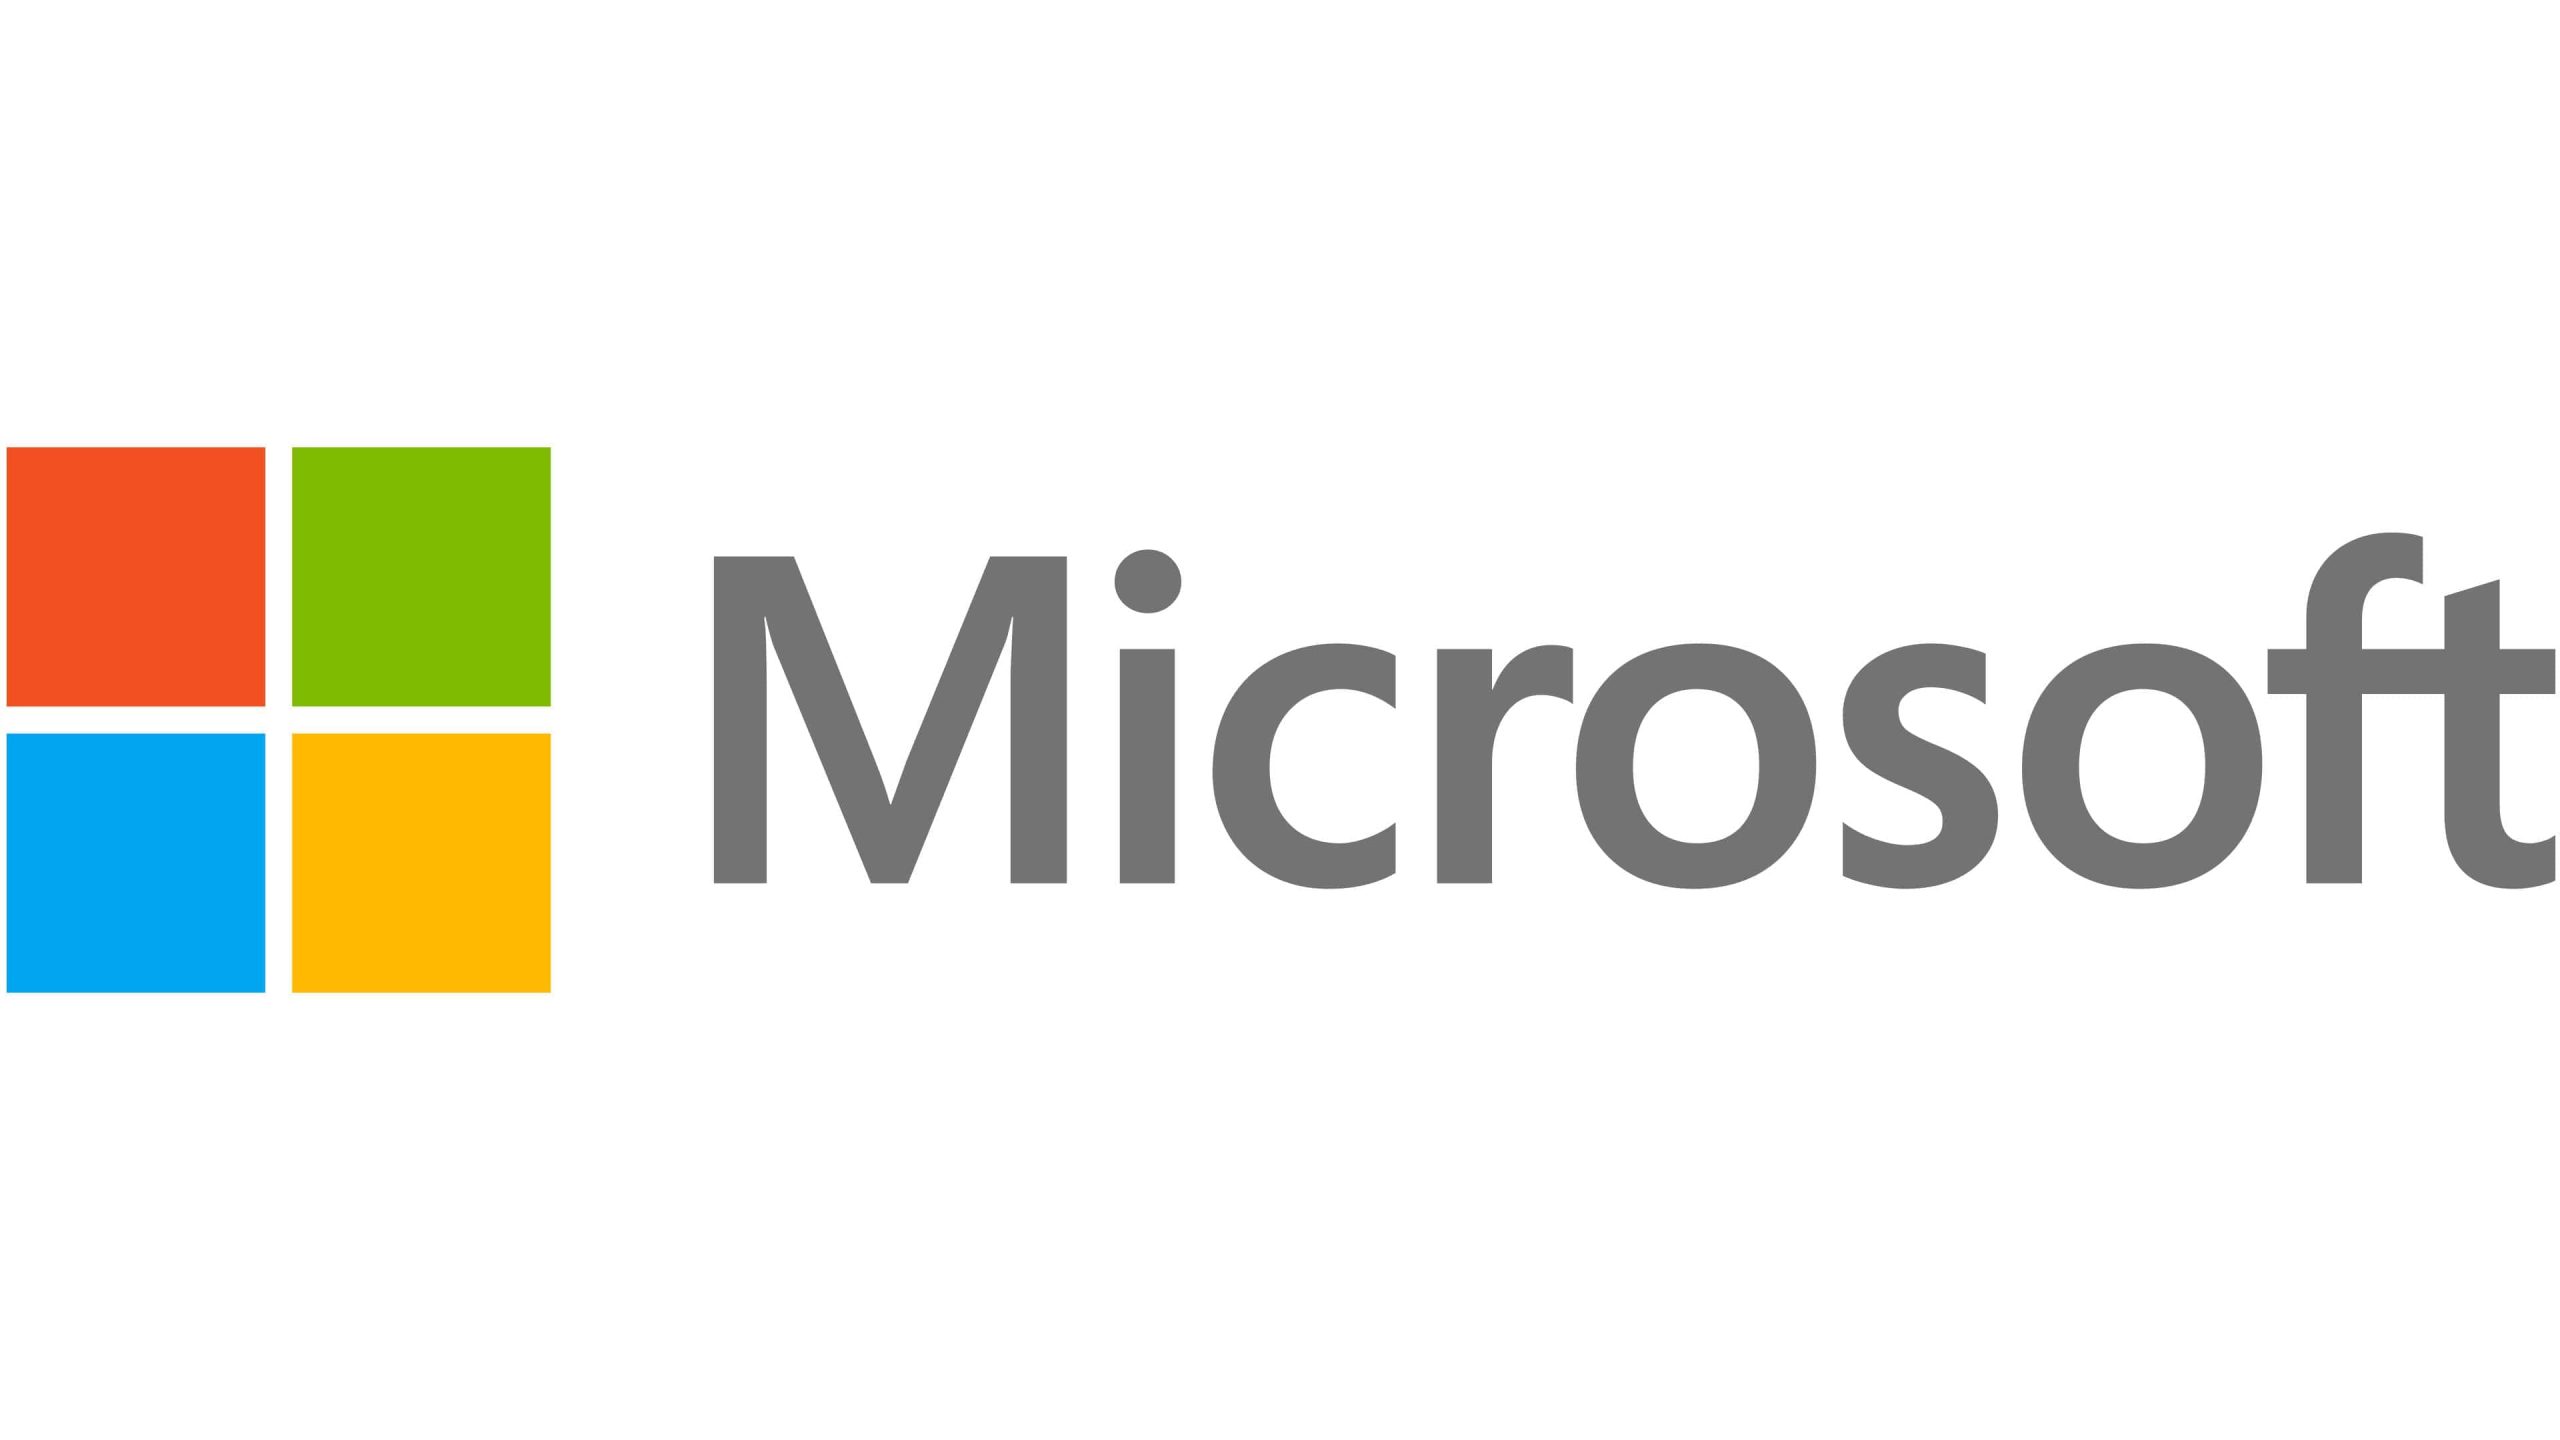 Microsoft 365 Business Basic MICROSOFT CFQ7TTC0LH18P1MM - 365 Business Basic